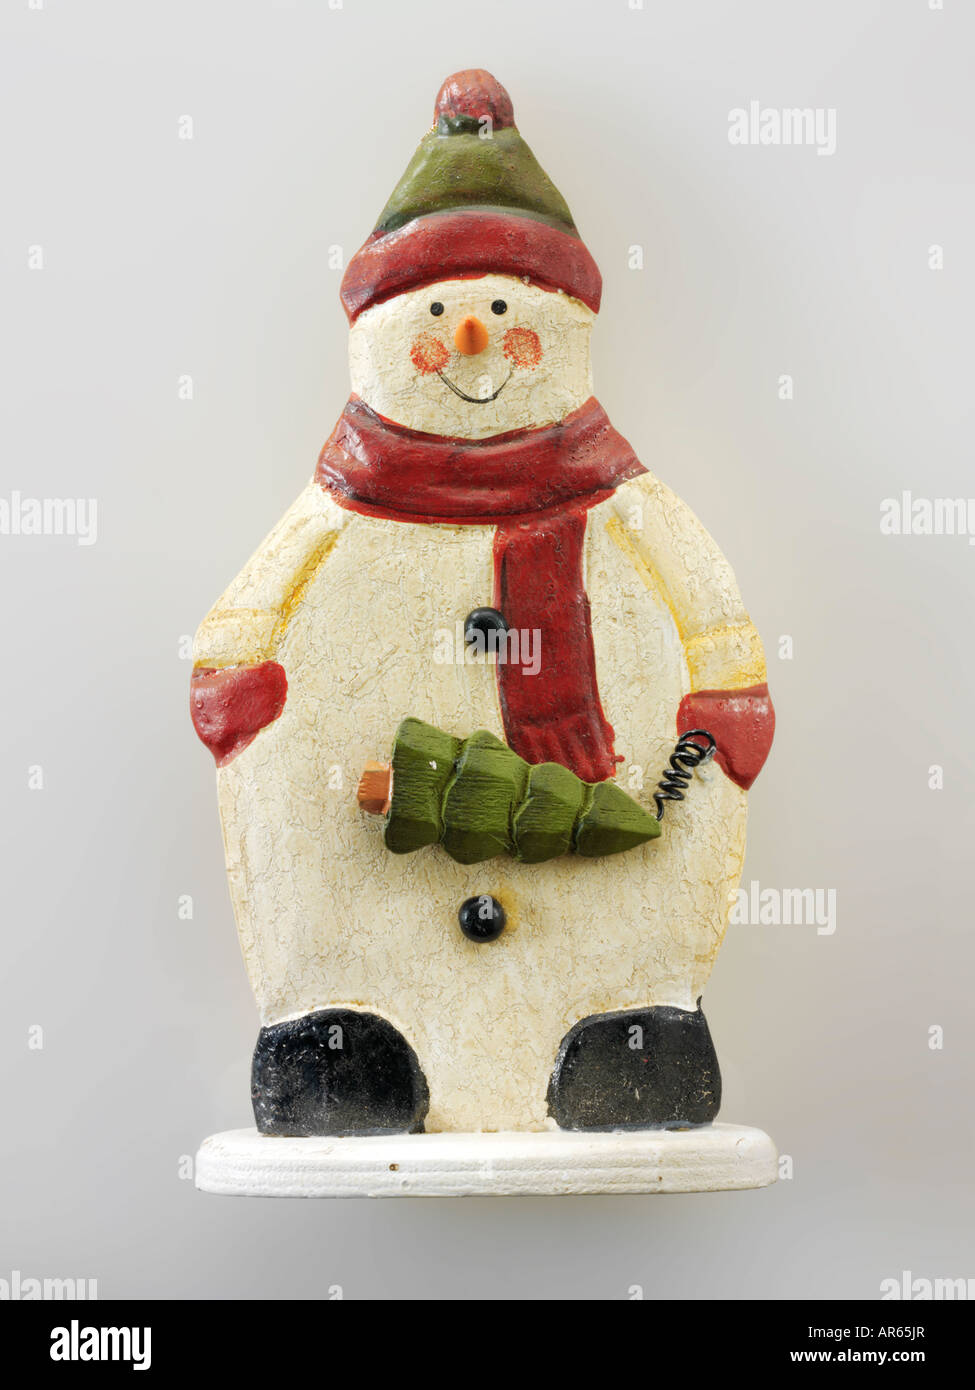 festive wooden 'Christmas snowman' decoration Stock Photo